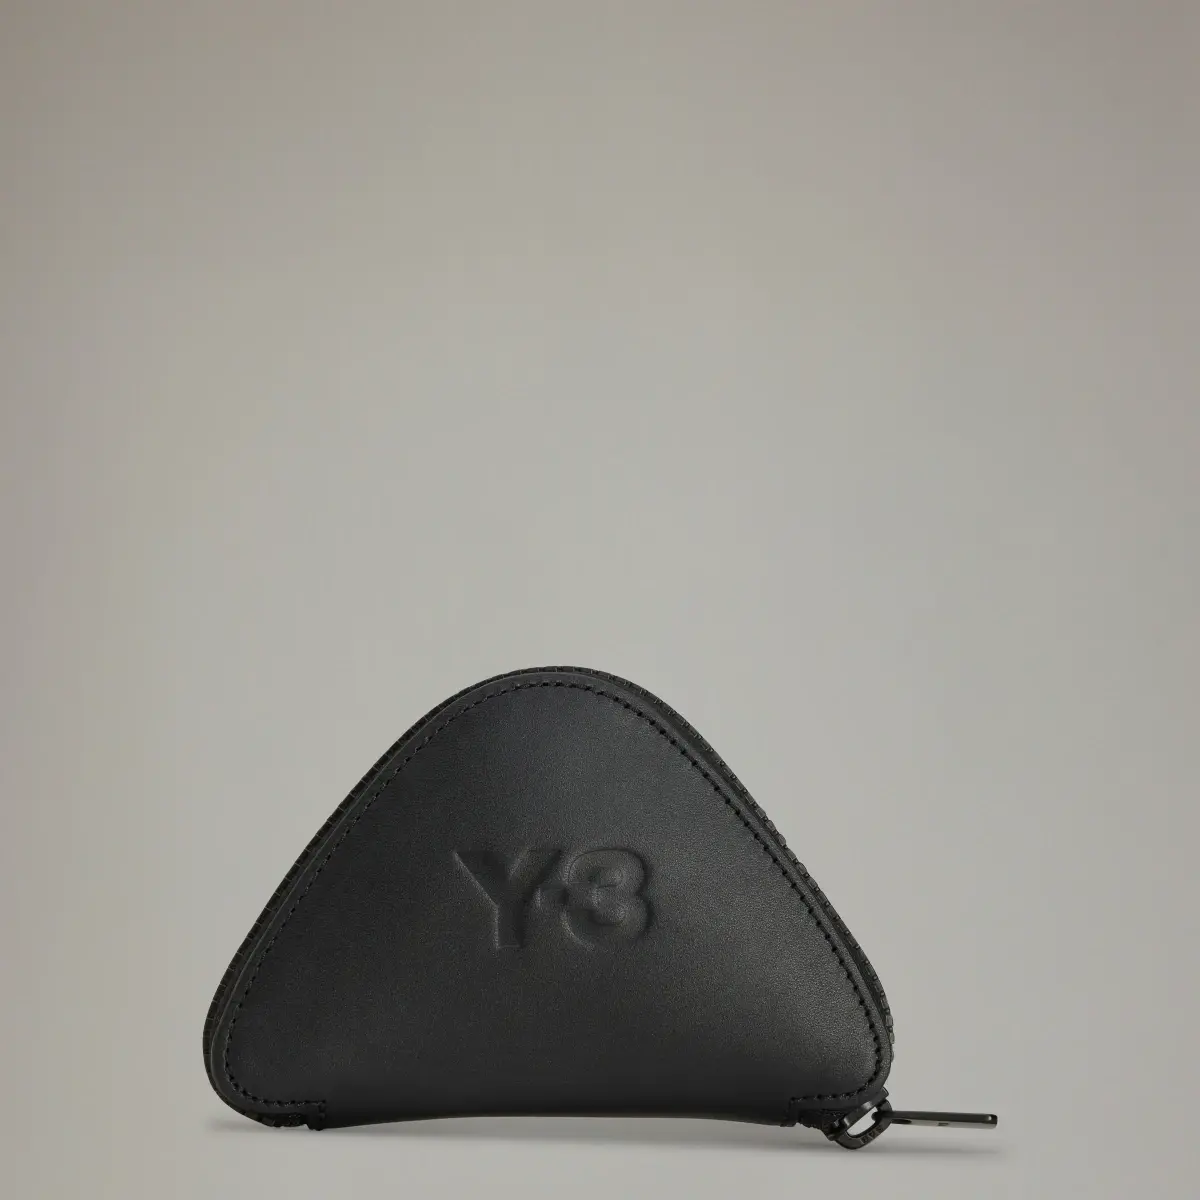 Adidas Y-3 Packable Tote. 1